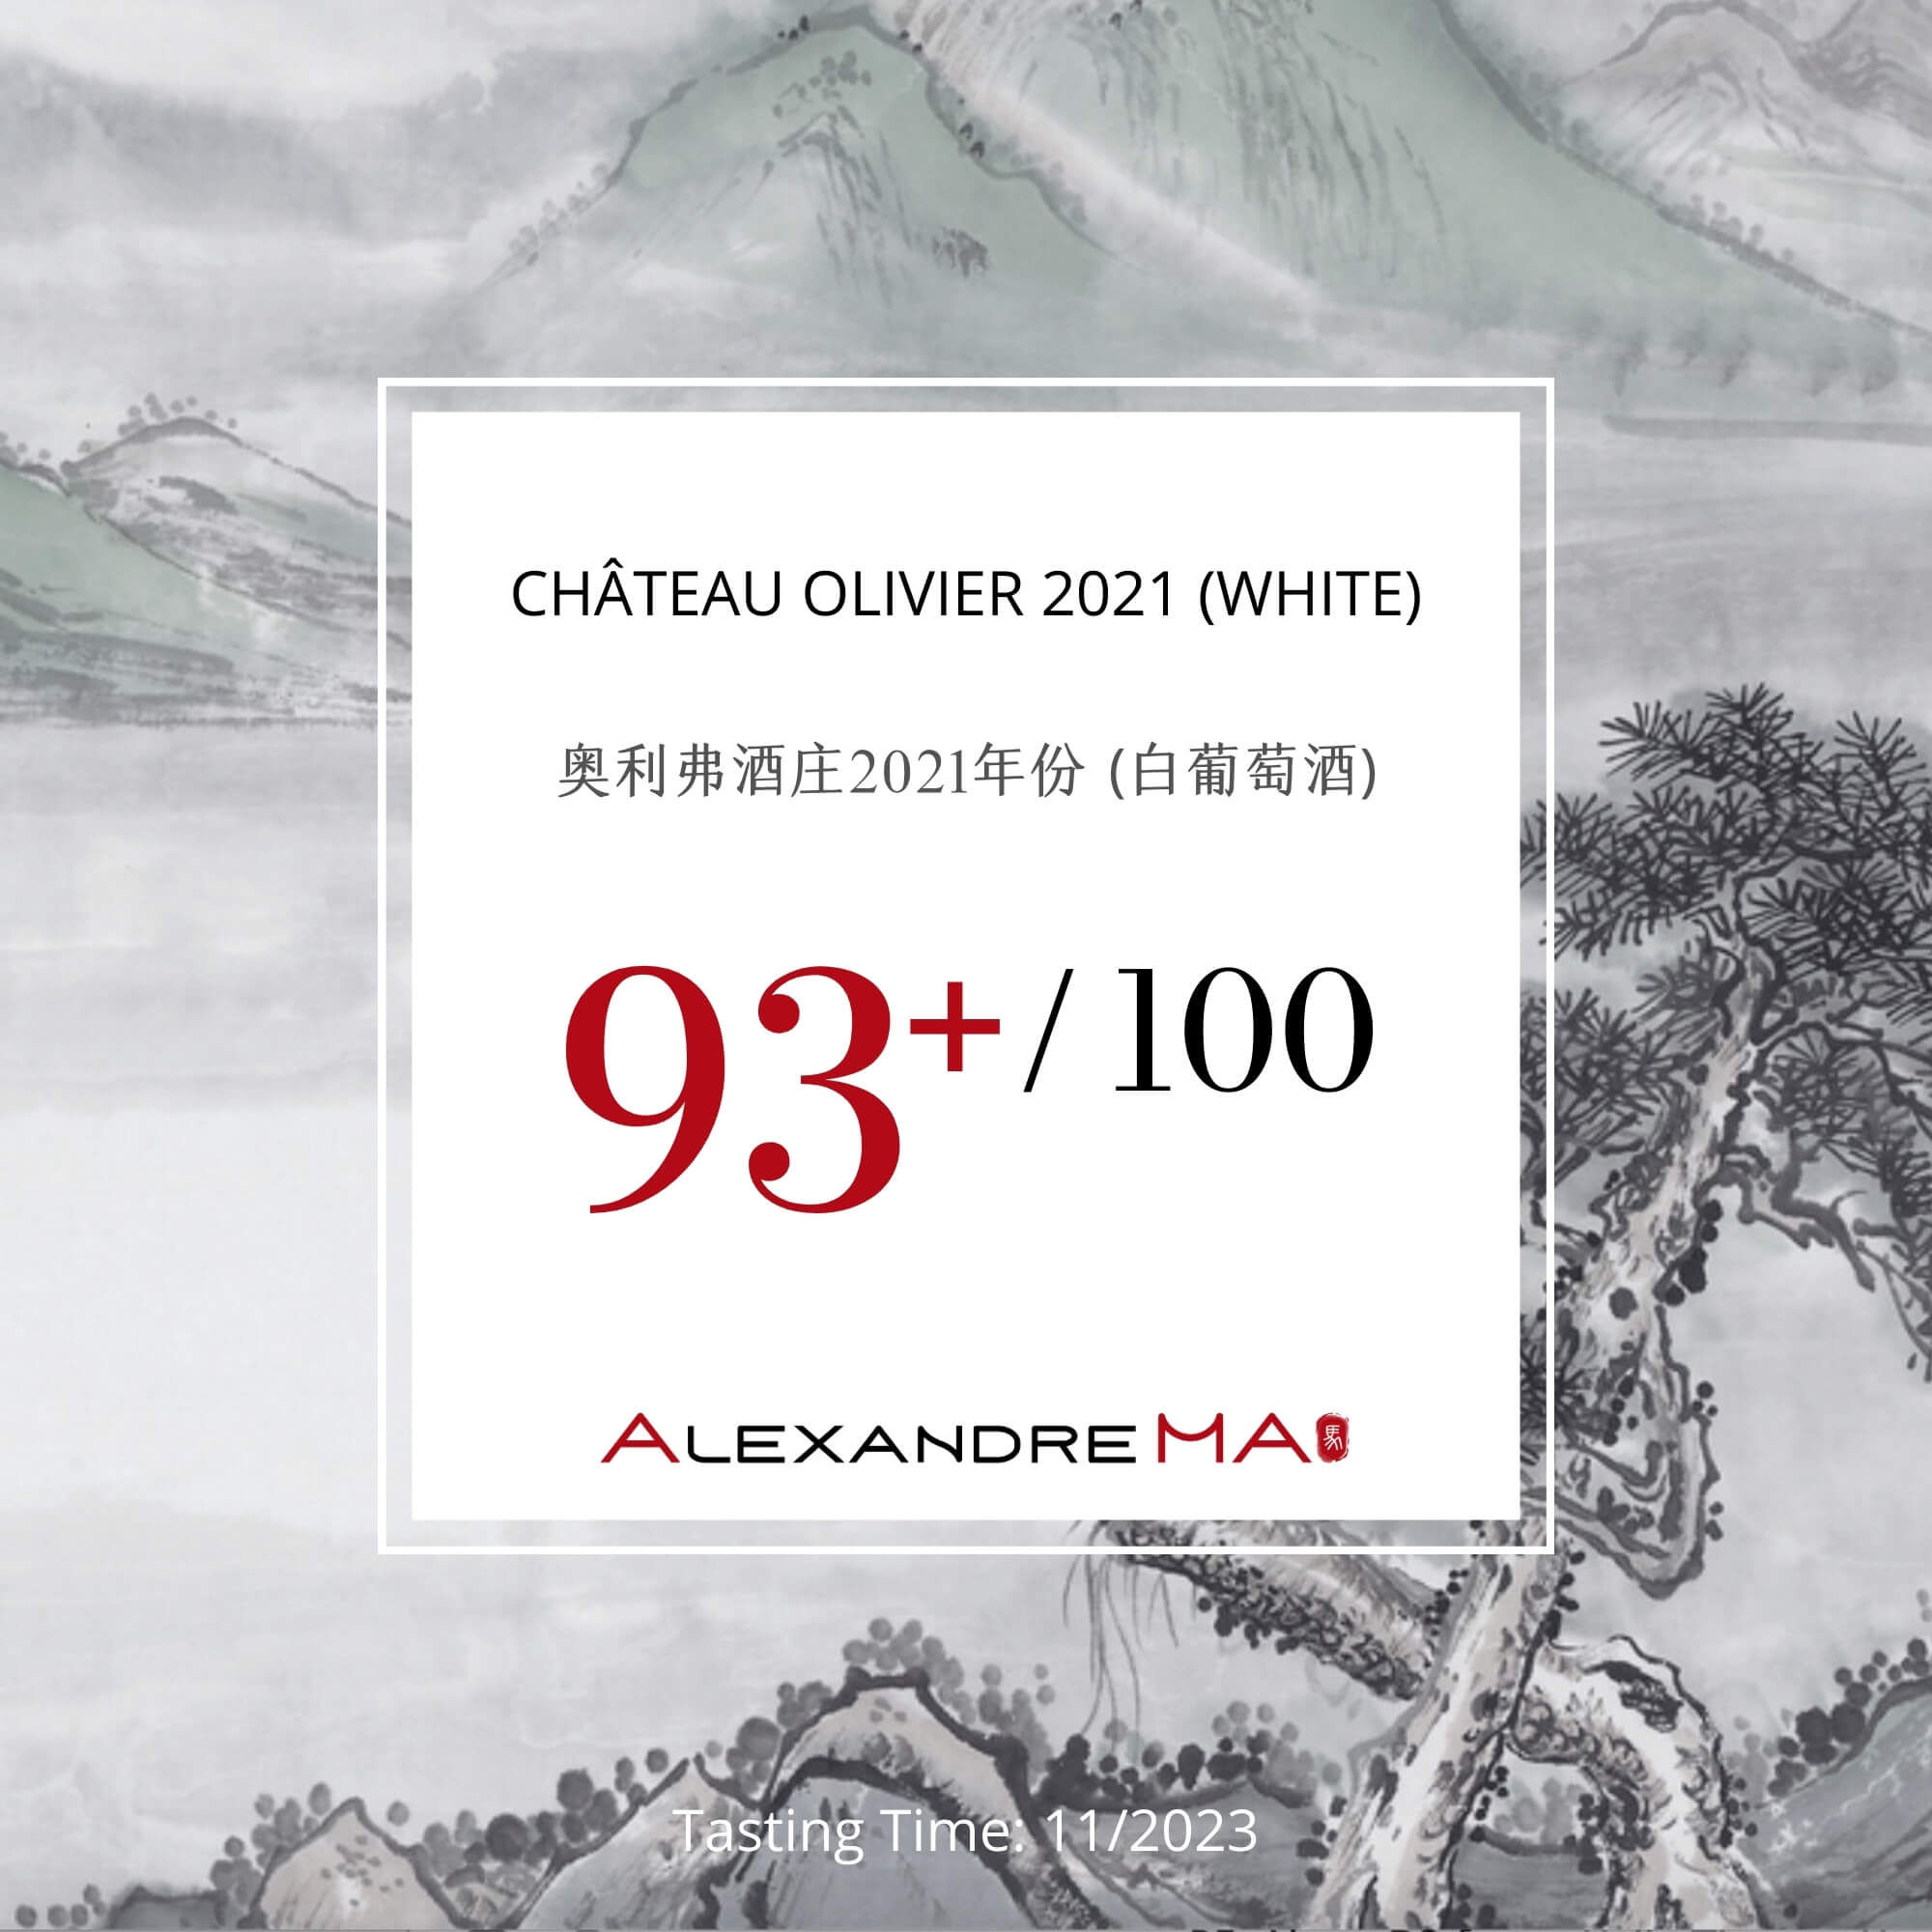 Château Olivier 2021-White 奥利弗酒庄 - Alexandre Ma